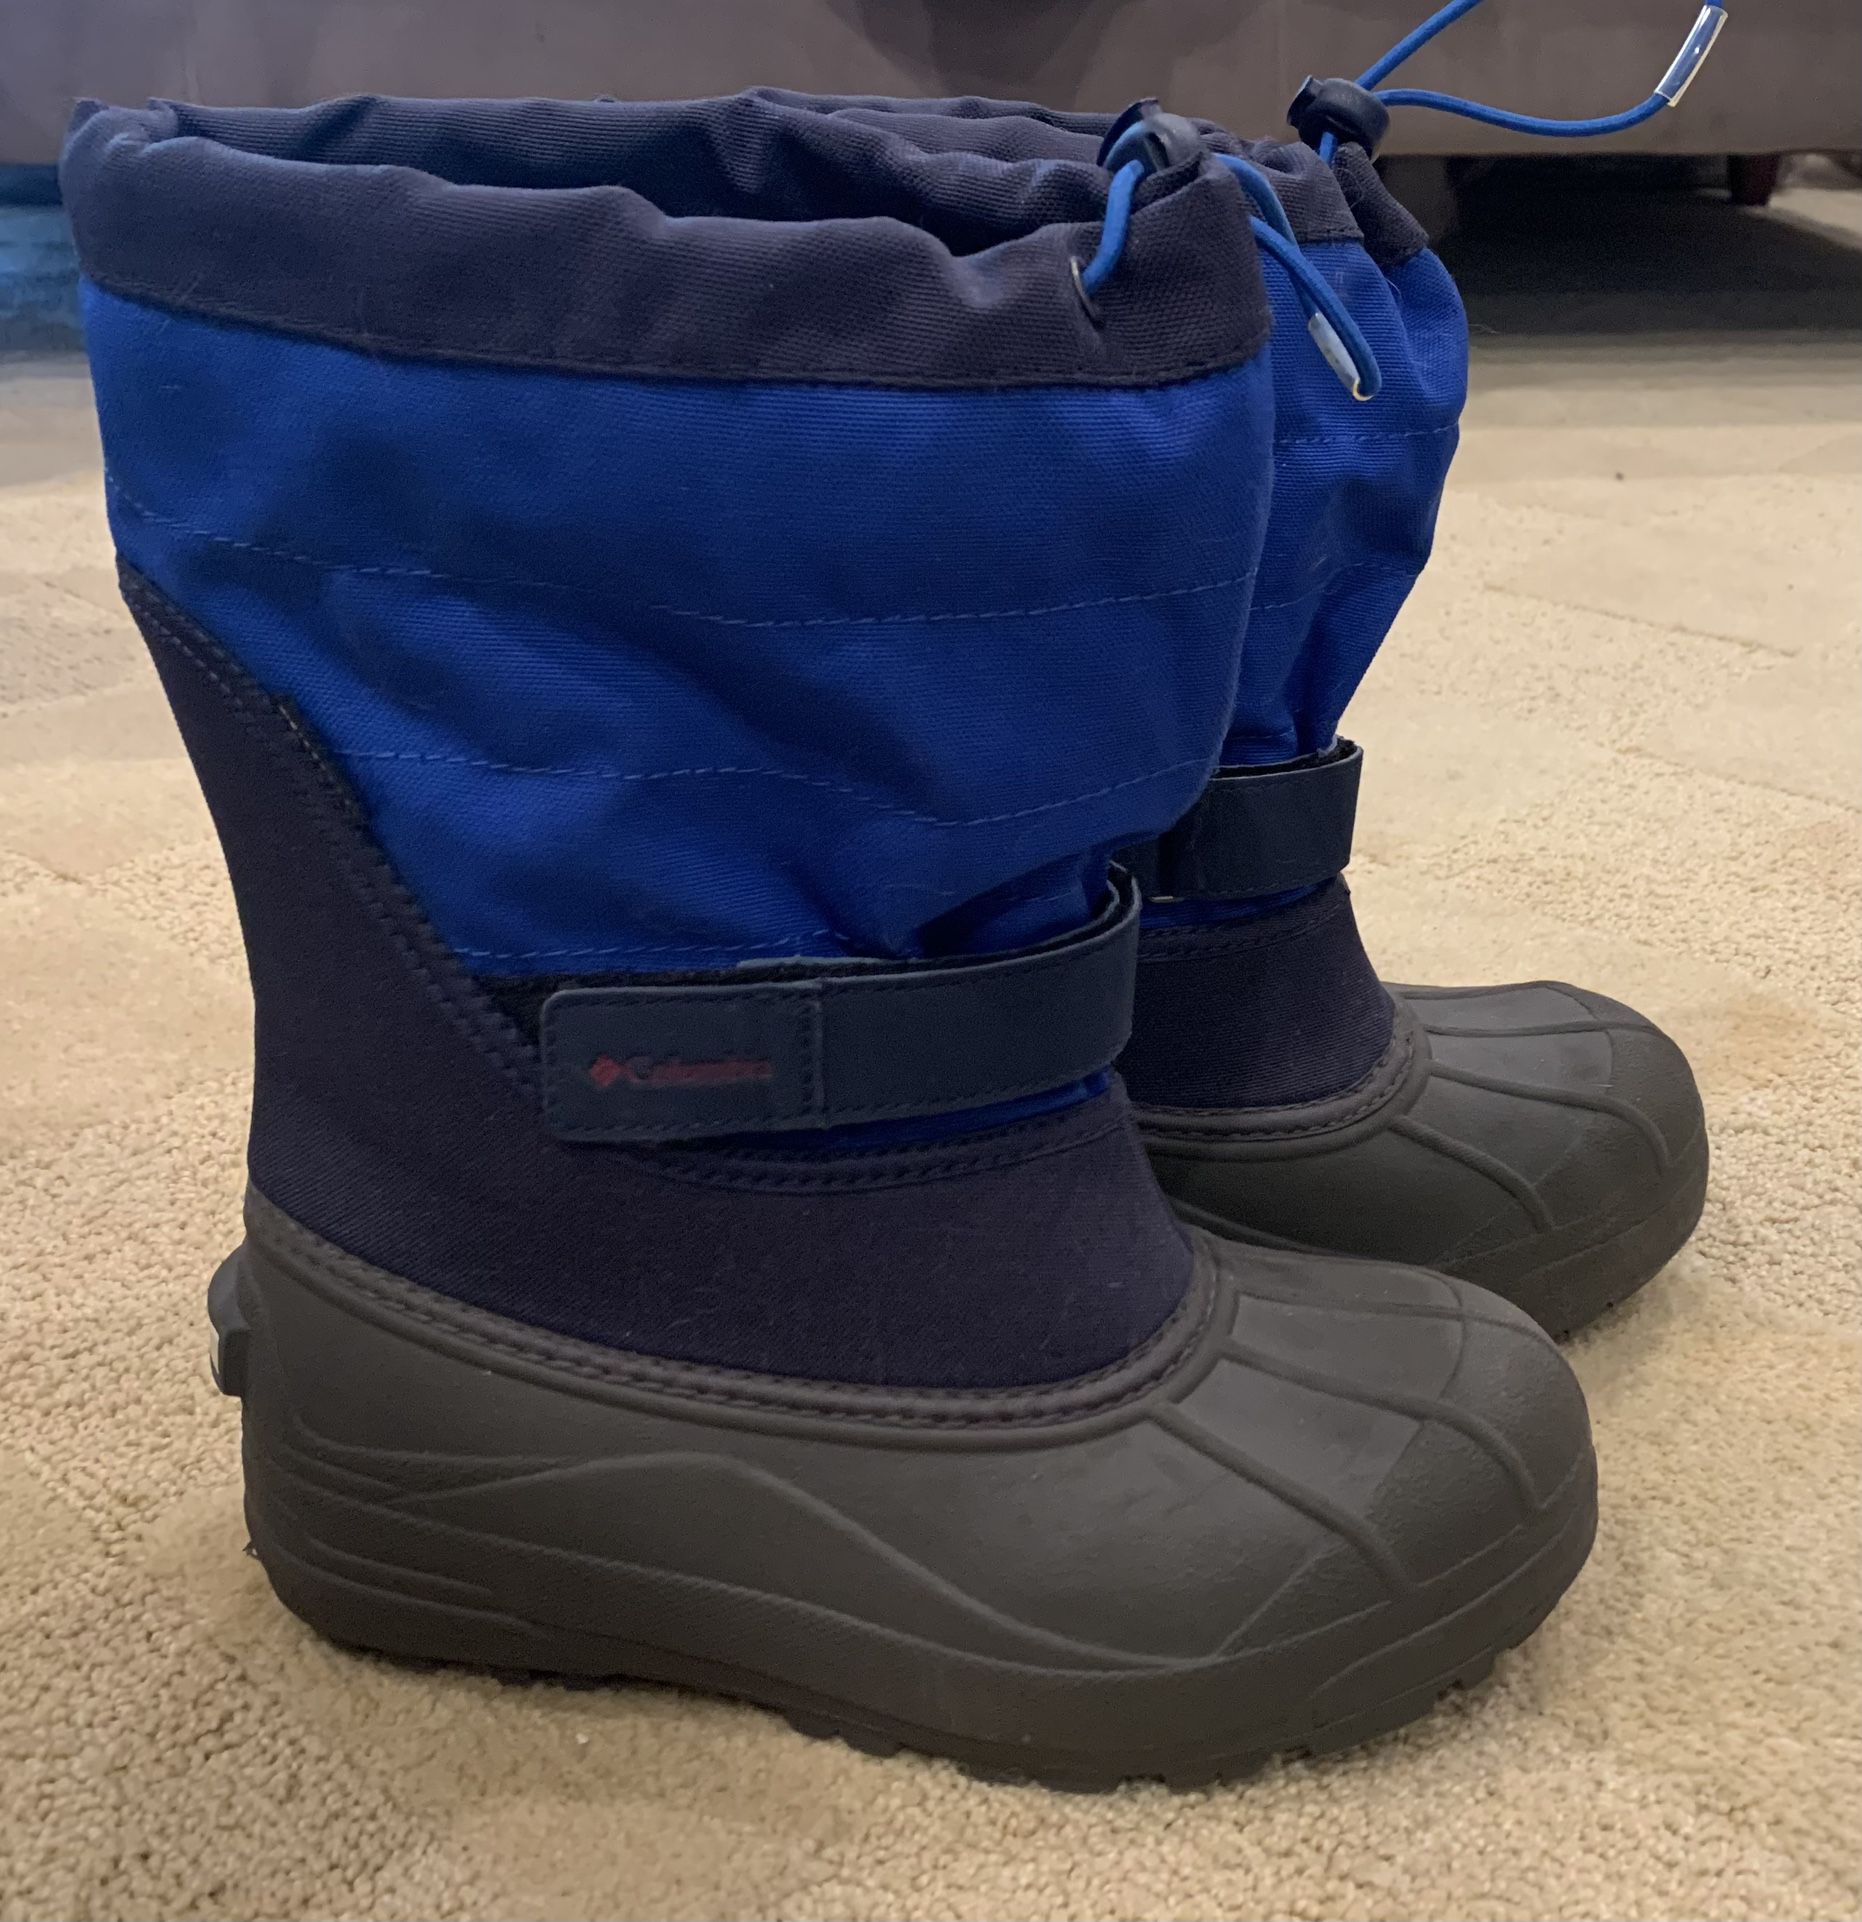 Columbia Youth Powderbug Snow Boots, Blue/Black/Gray, Size 5